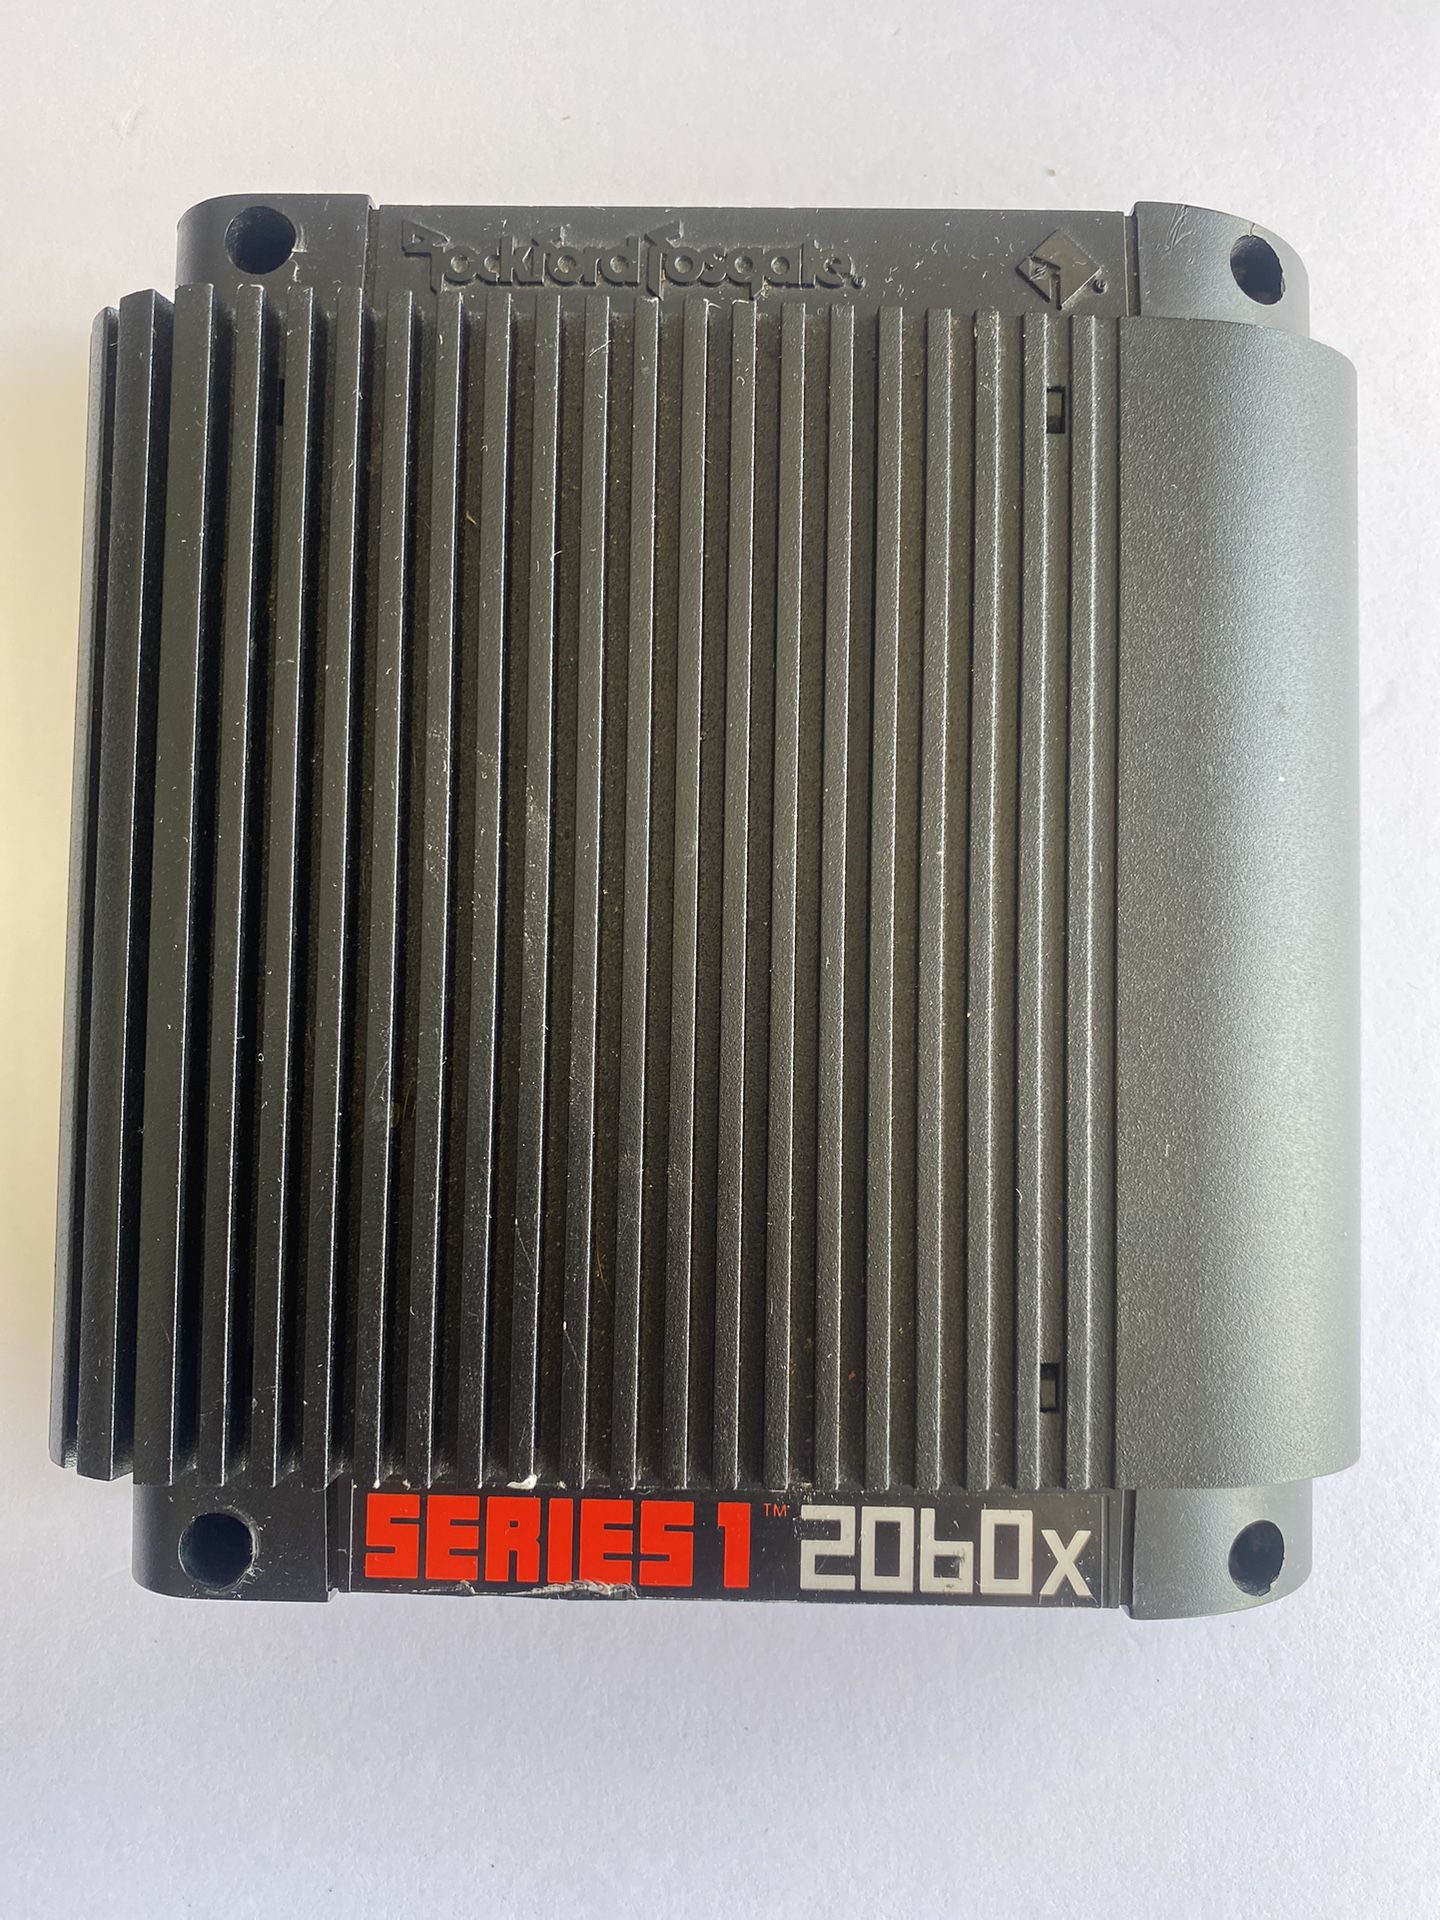 Vintage Rockford Fosgate 2060X Amplifier